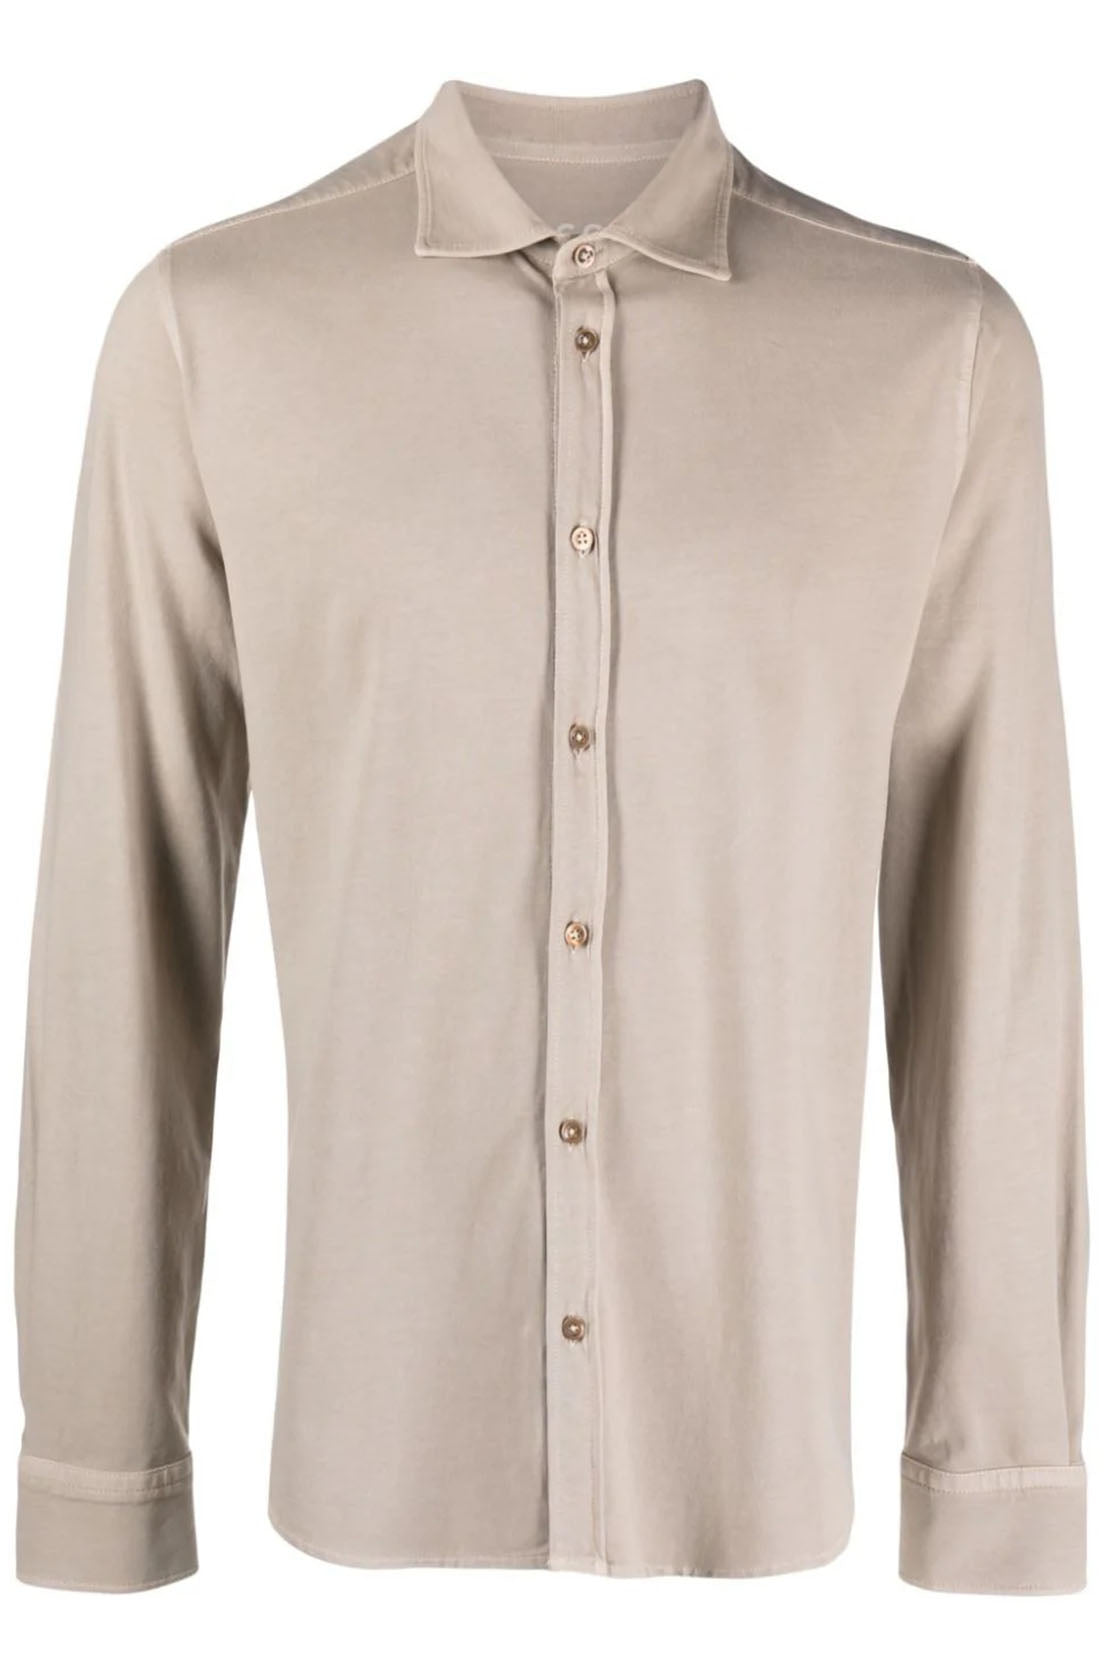 CIRCOLO 1901 - Super Soft Stretch Cotton Jersey Shirt in Rainy Day Beige CN4036